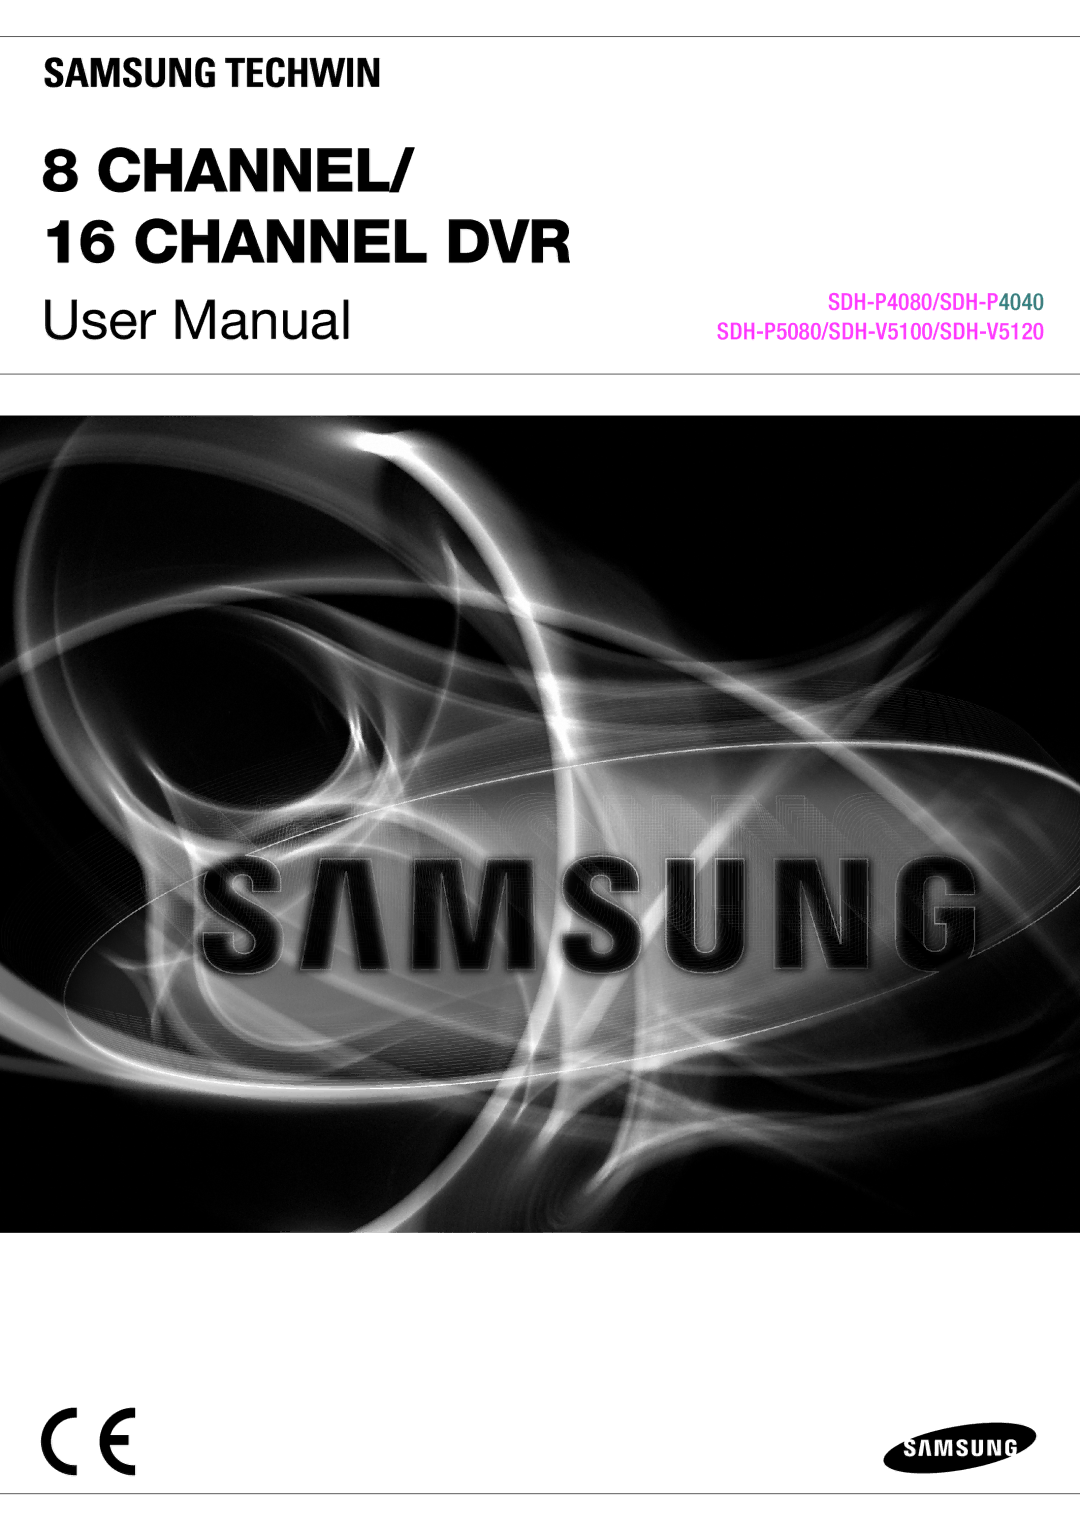 Samsung SDHP4080 user manual Channel Channel DVR 